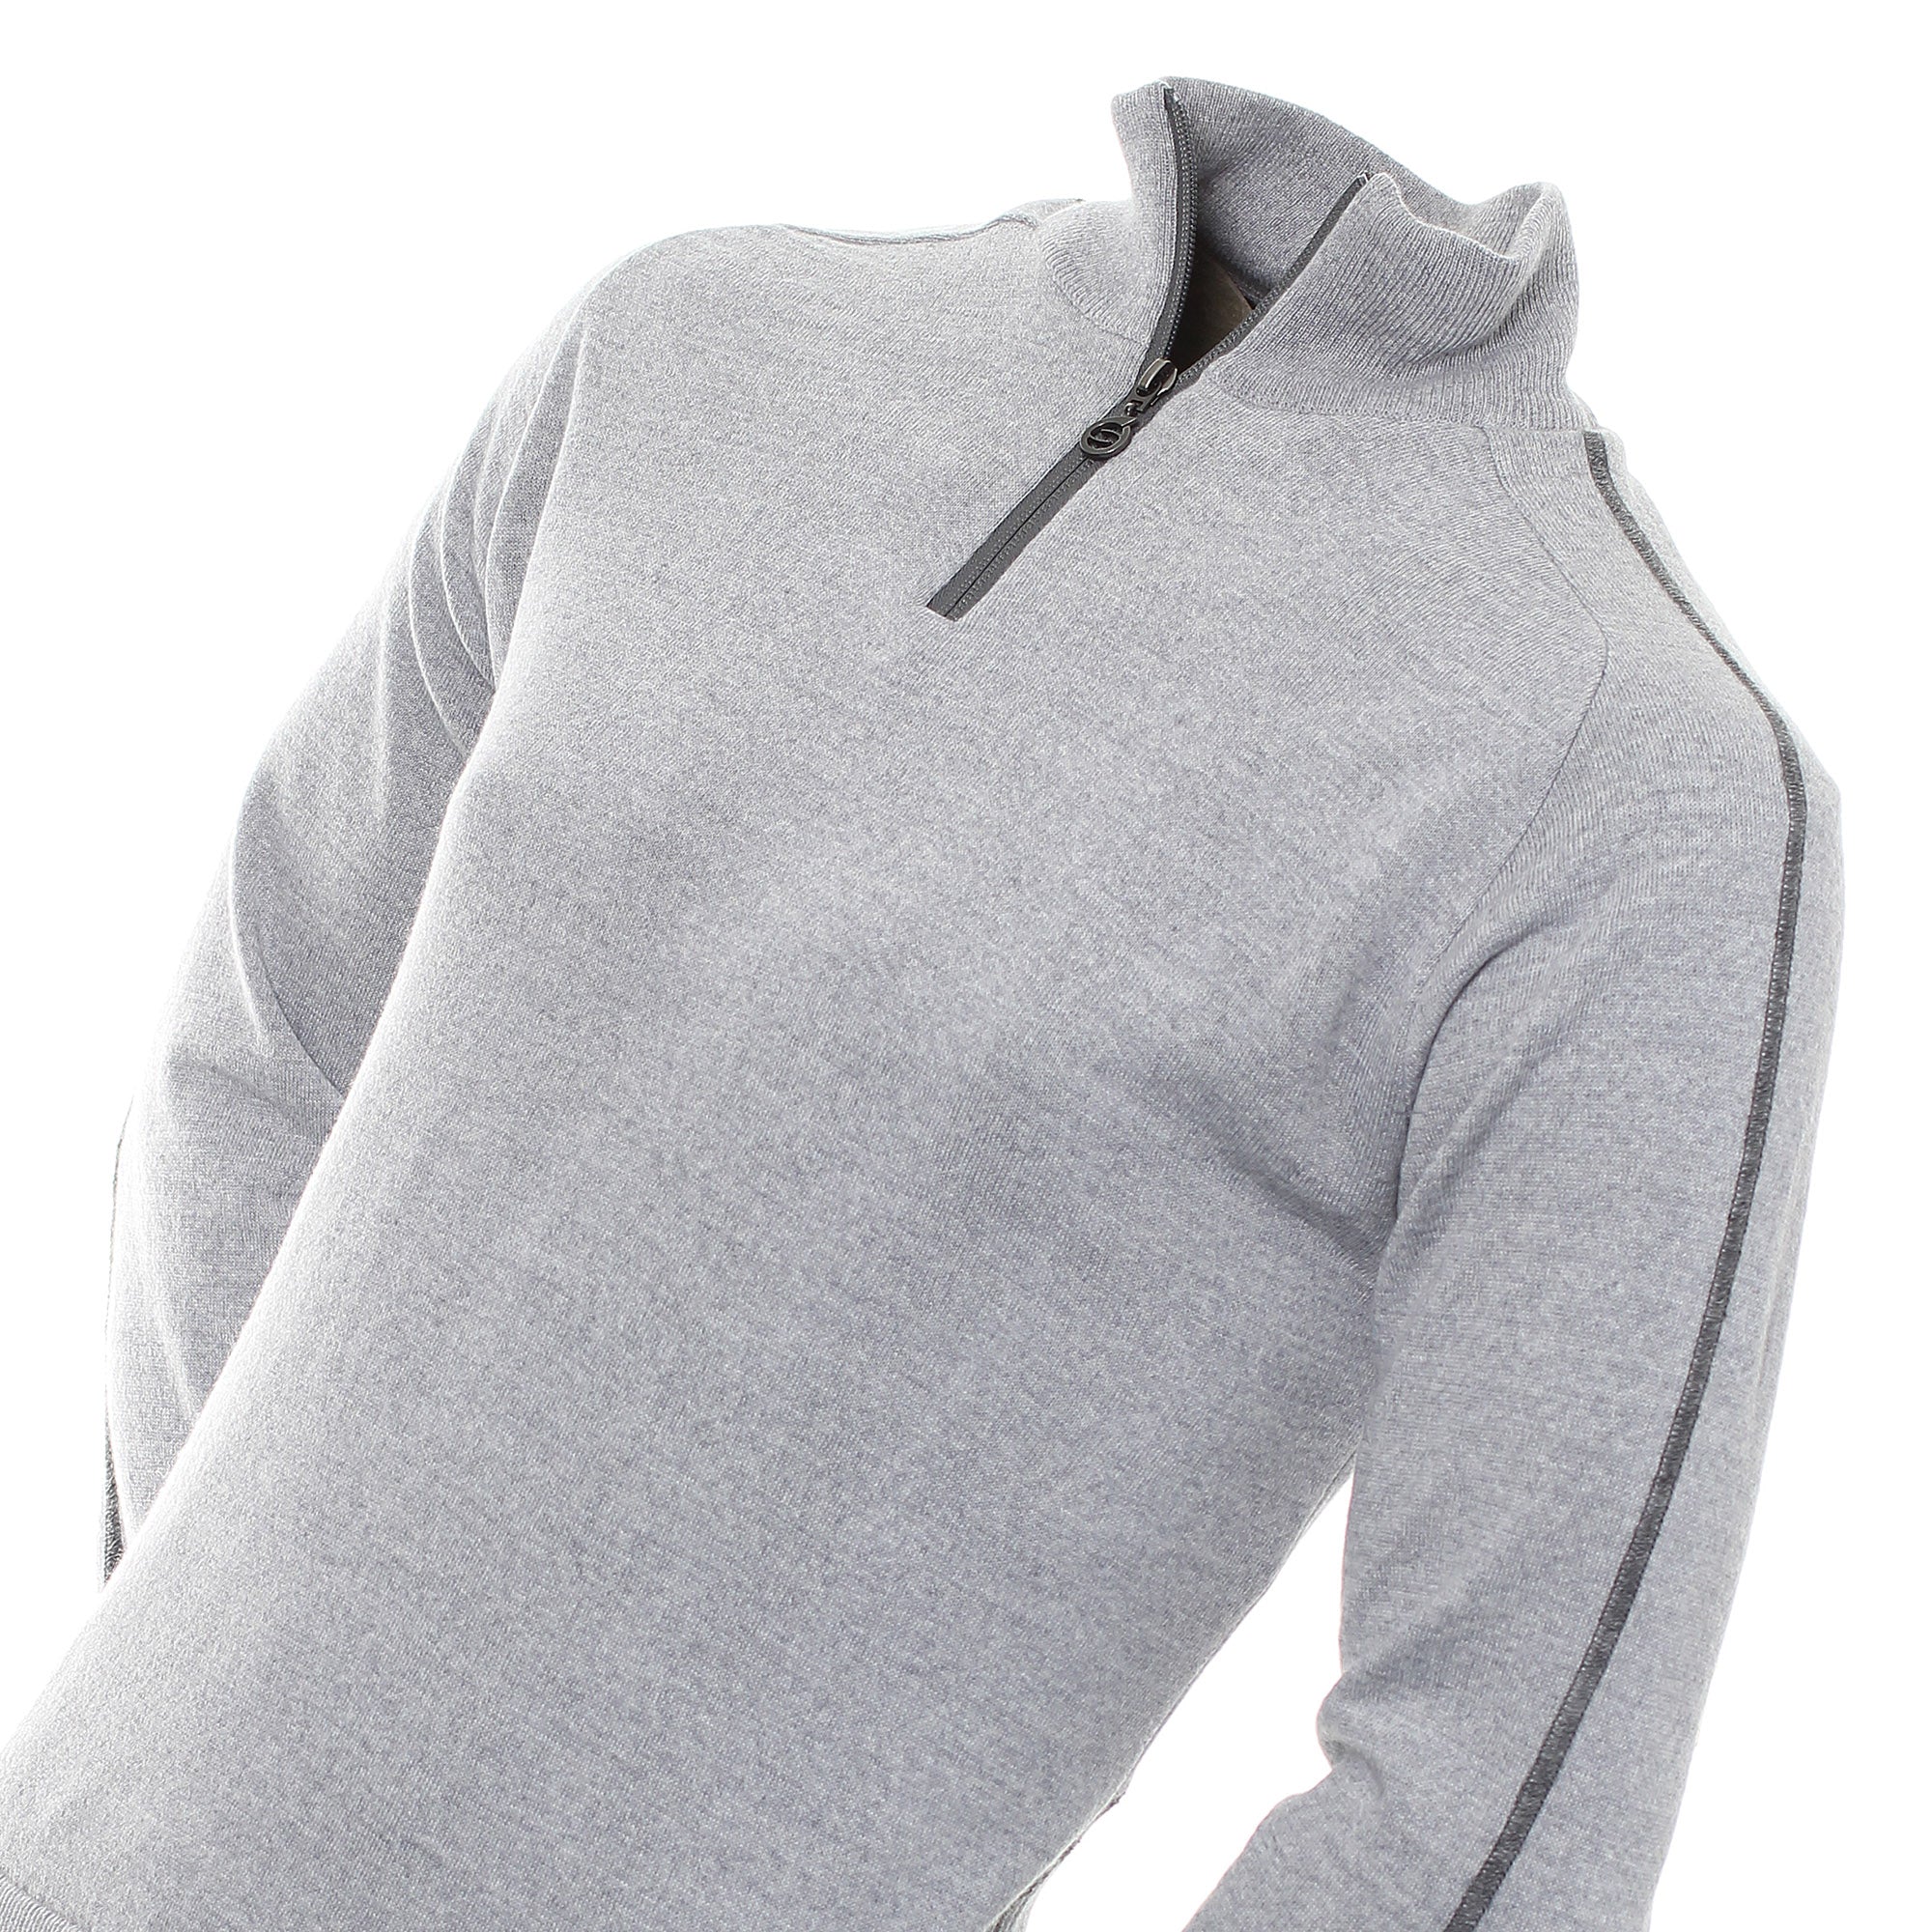 sunderland-golf-hamsin-lined-sweater-silver-gunmetal